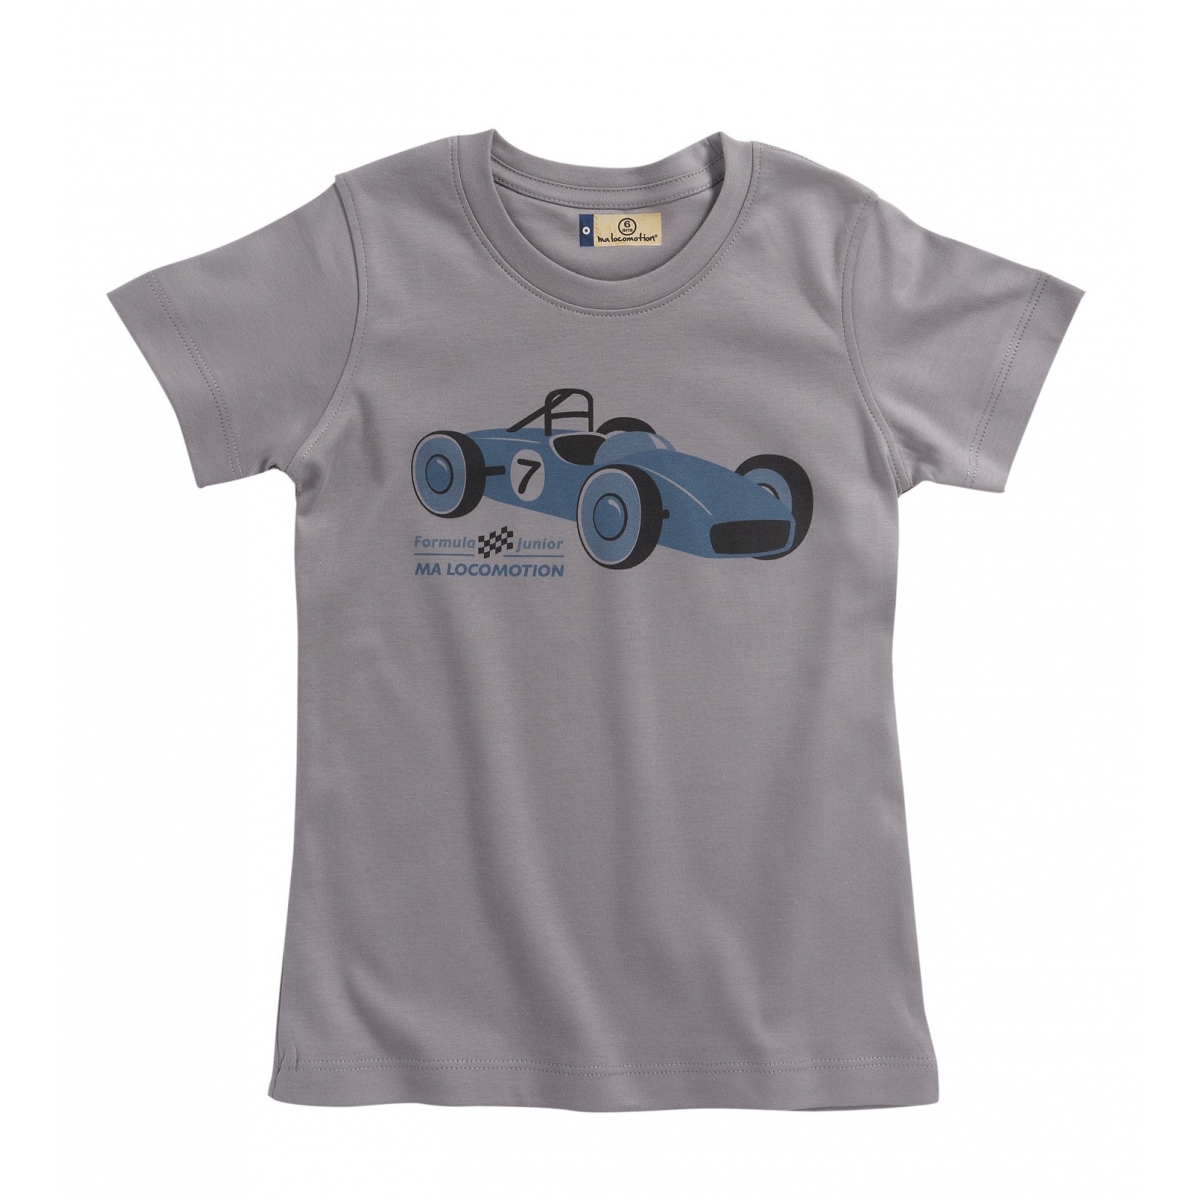 Formula Junior t-shirt